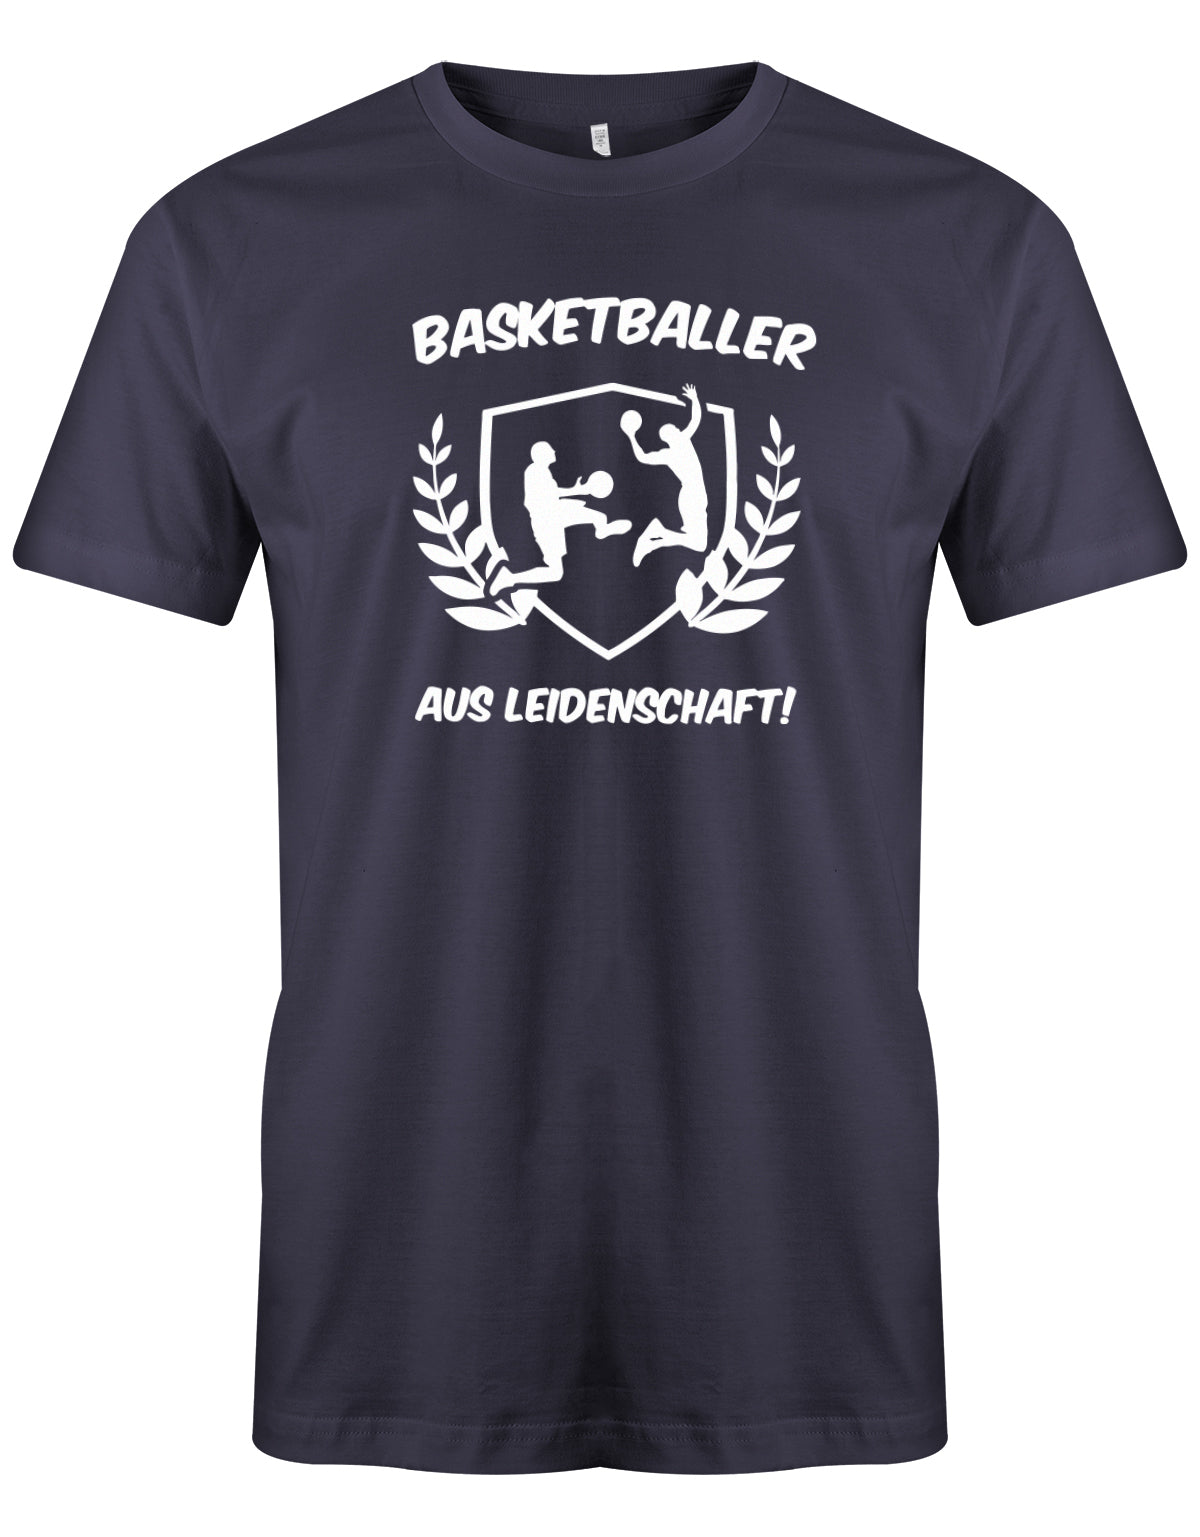 herren-shirt-navyvAQpNATy8rLCt